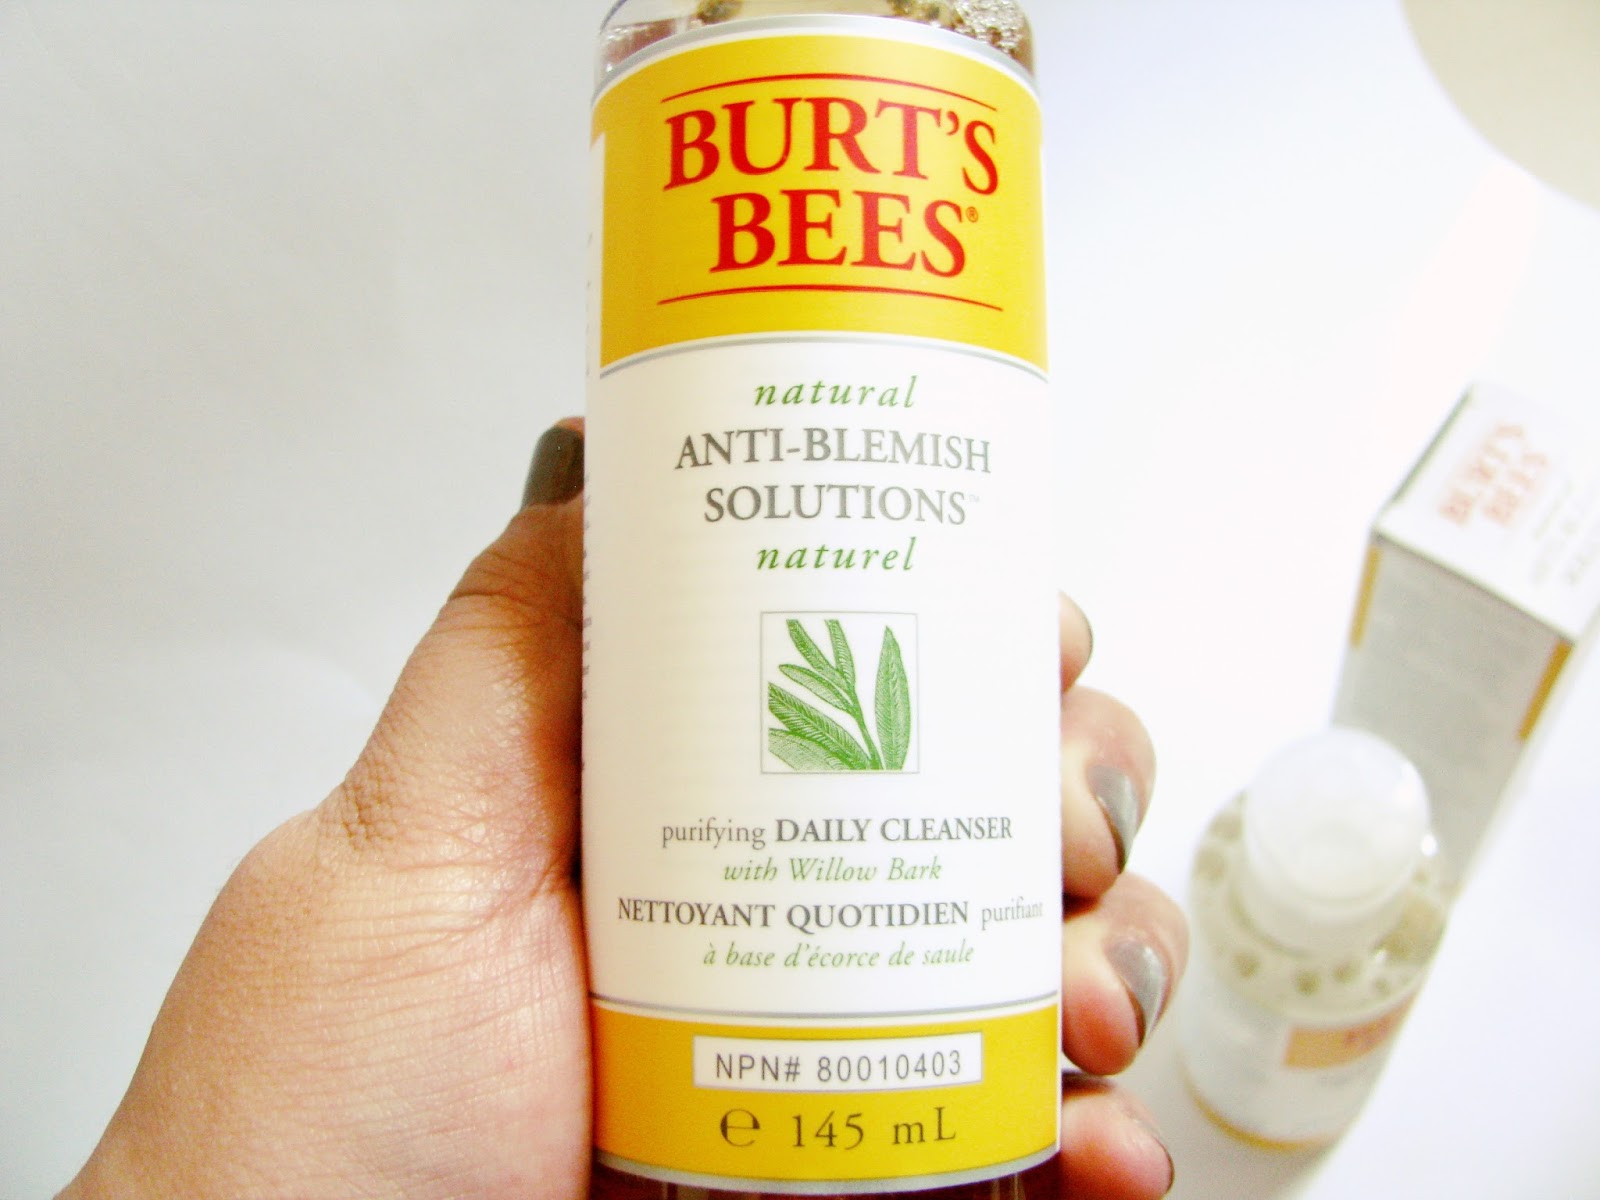 http://www.lightsandlatte.com/2016/04/burts-bees-natural-anti-blemish.html